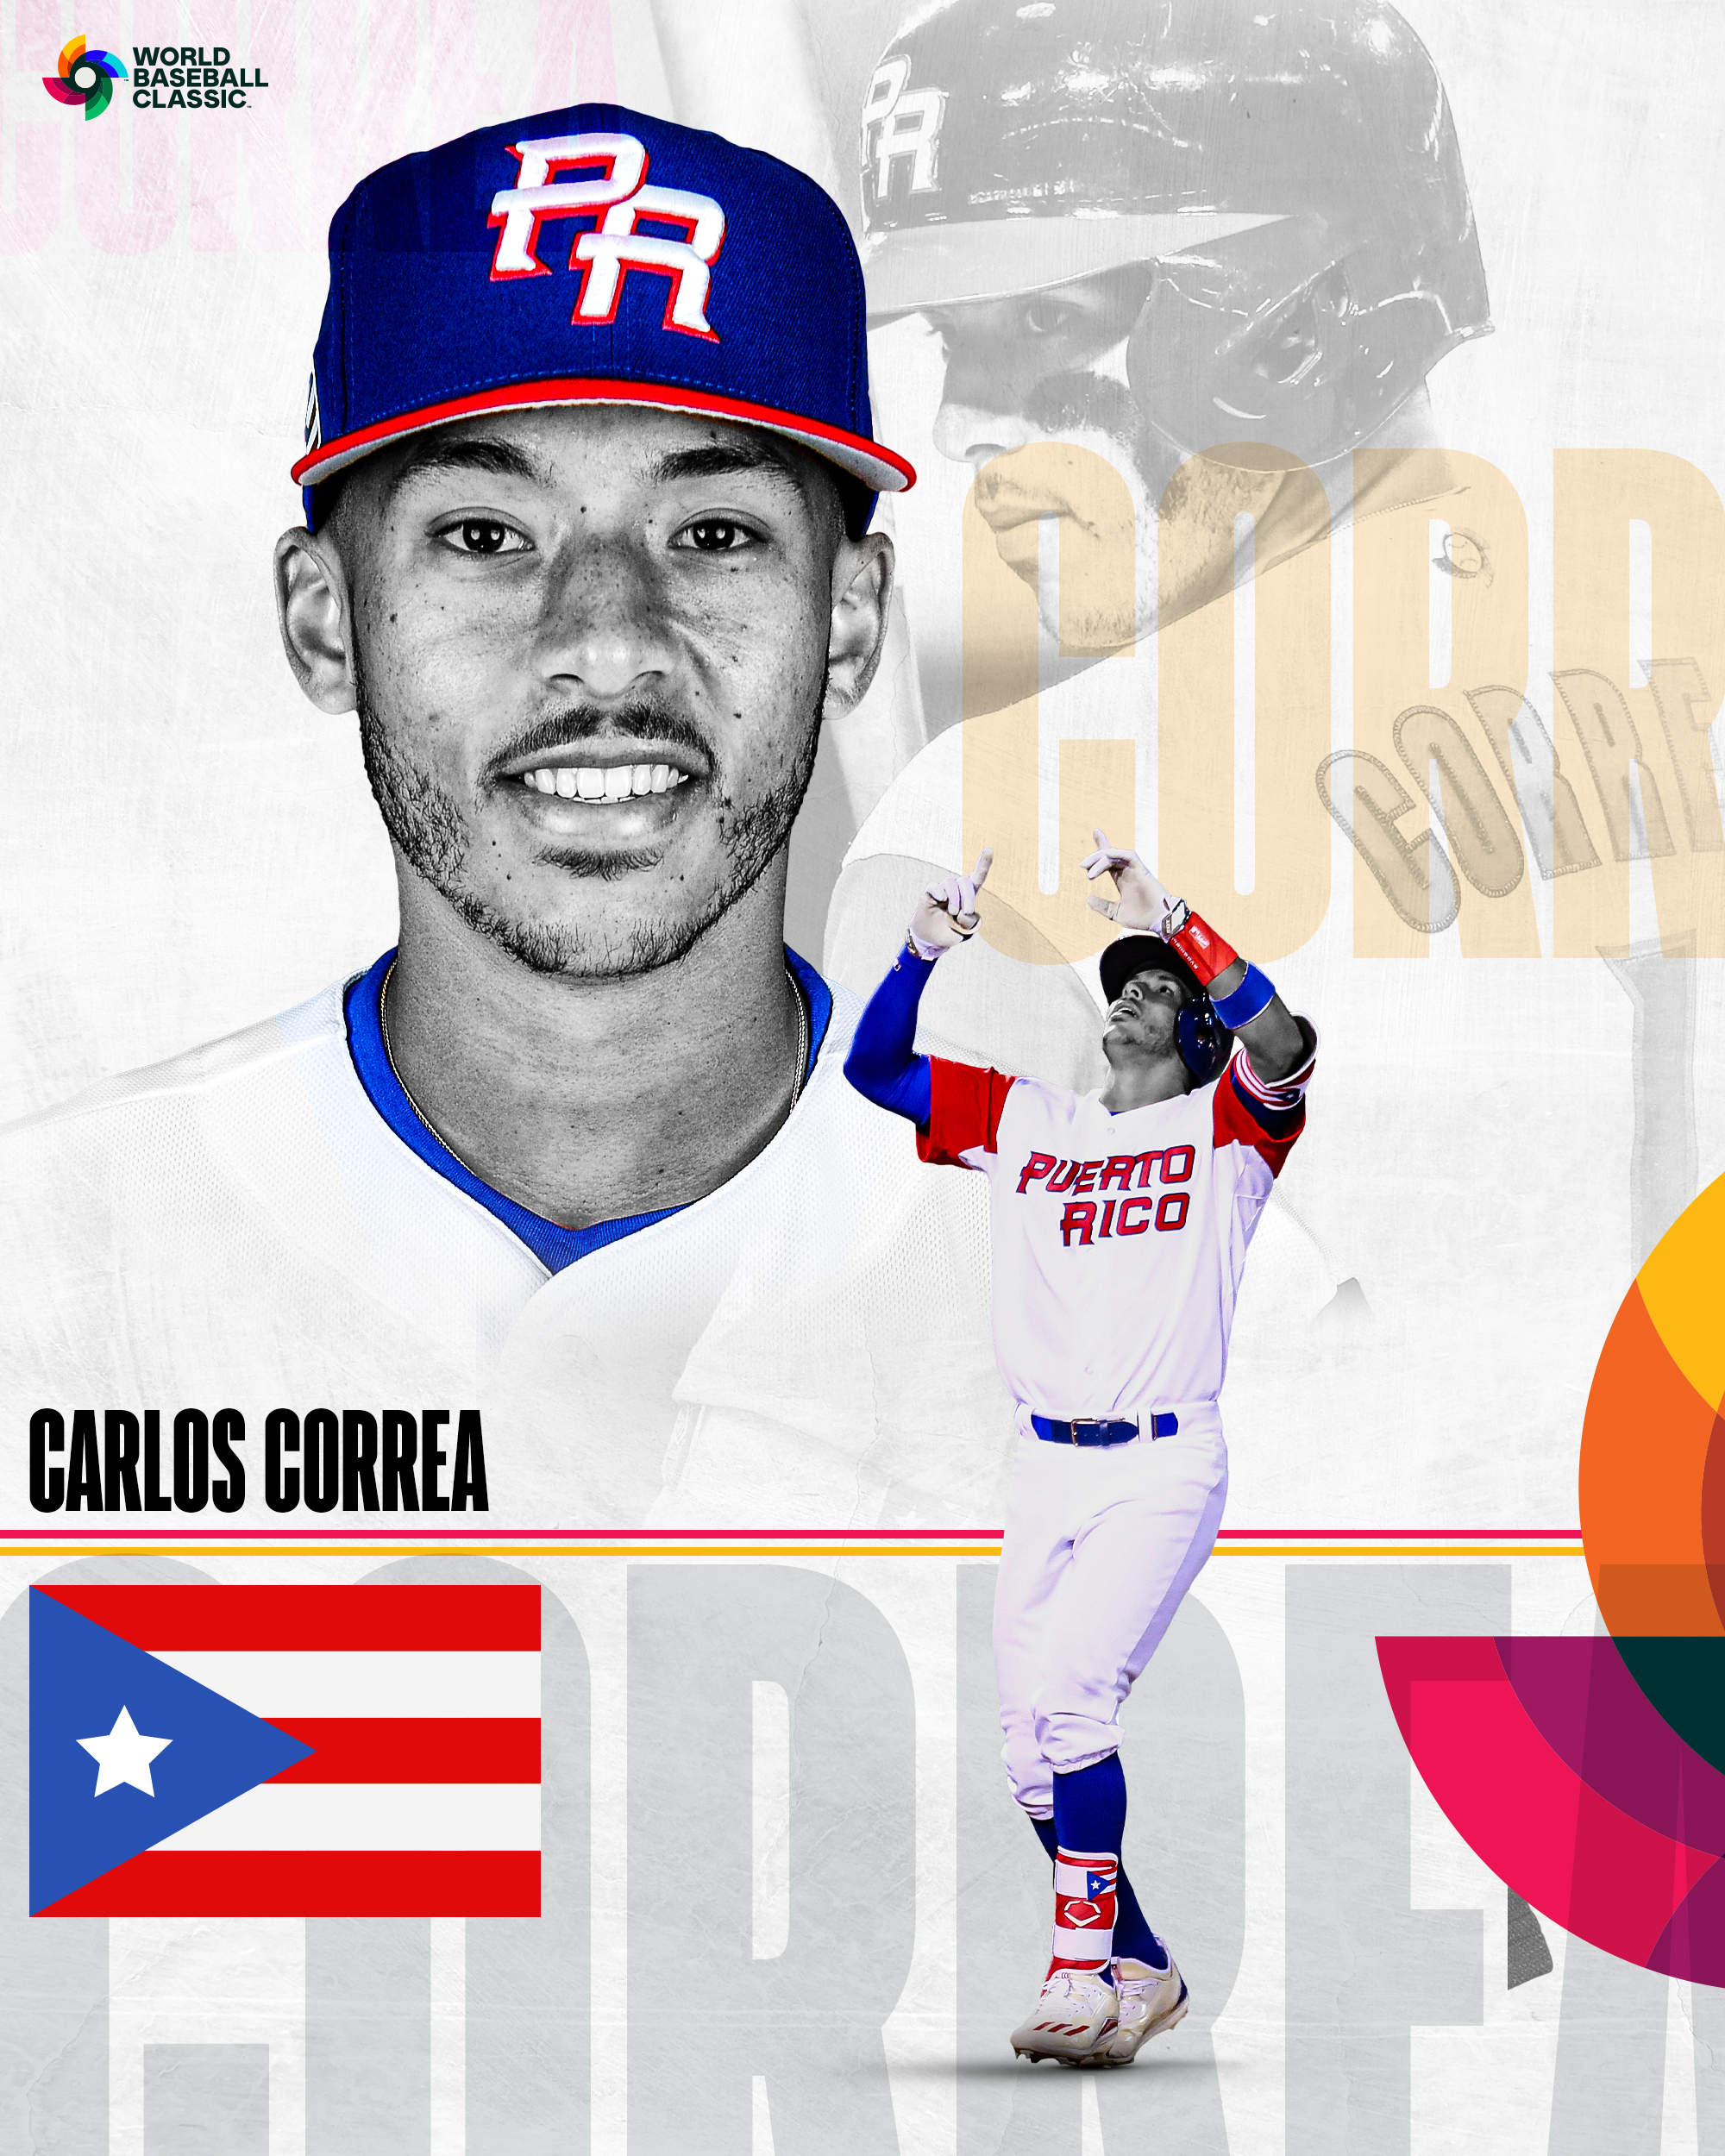 World Baseball Classic on X: Carlos Correa intends to represent